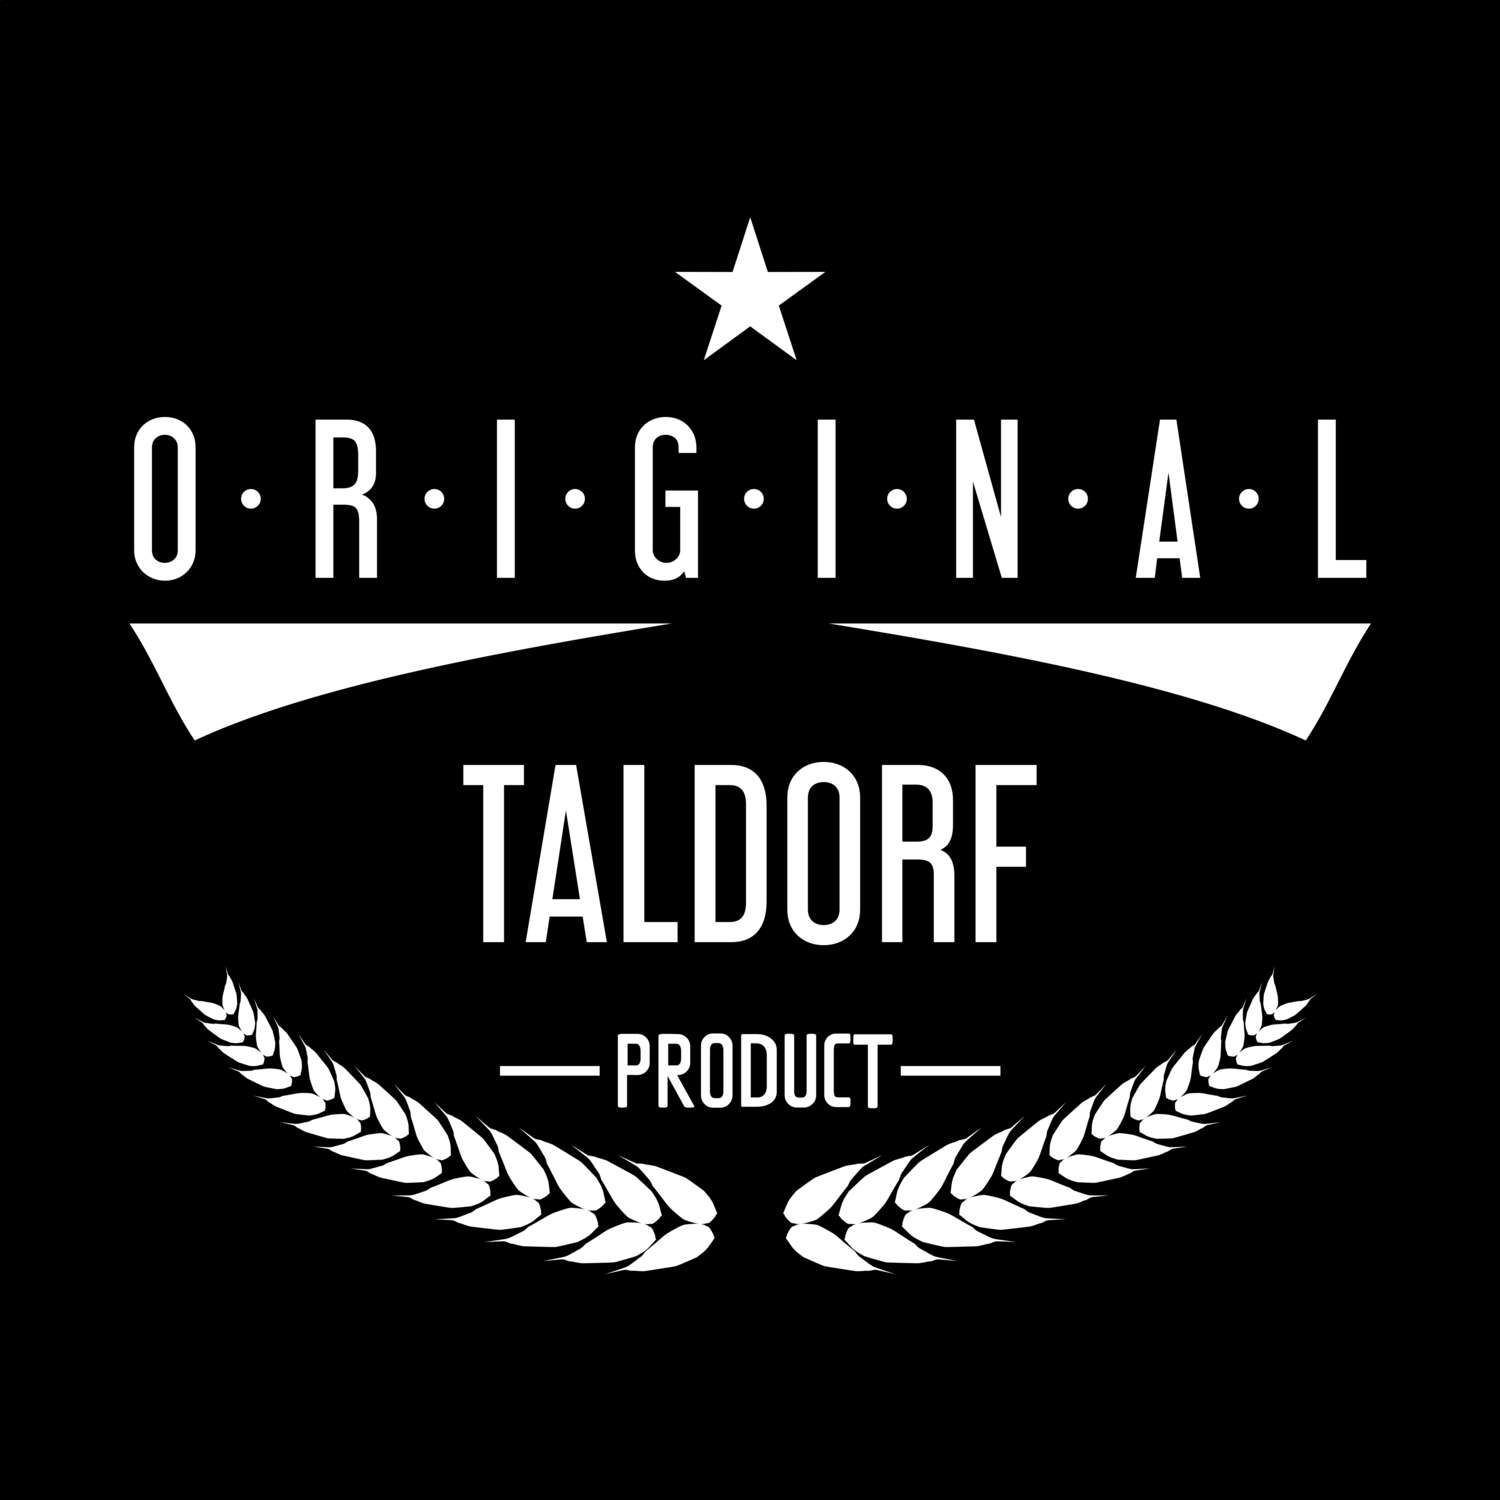 Taldorf T-Shirt »Original Product«